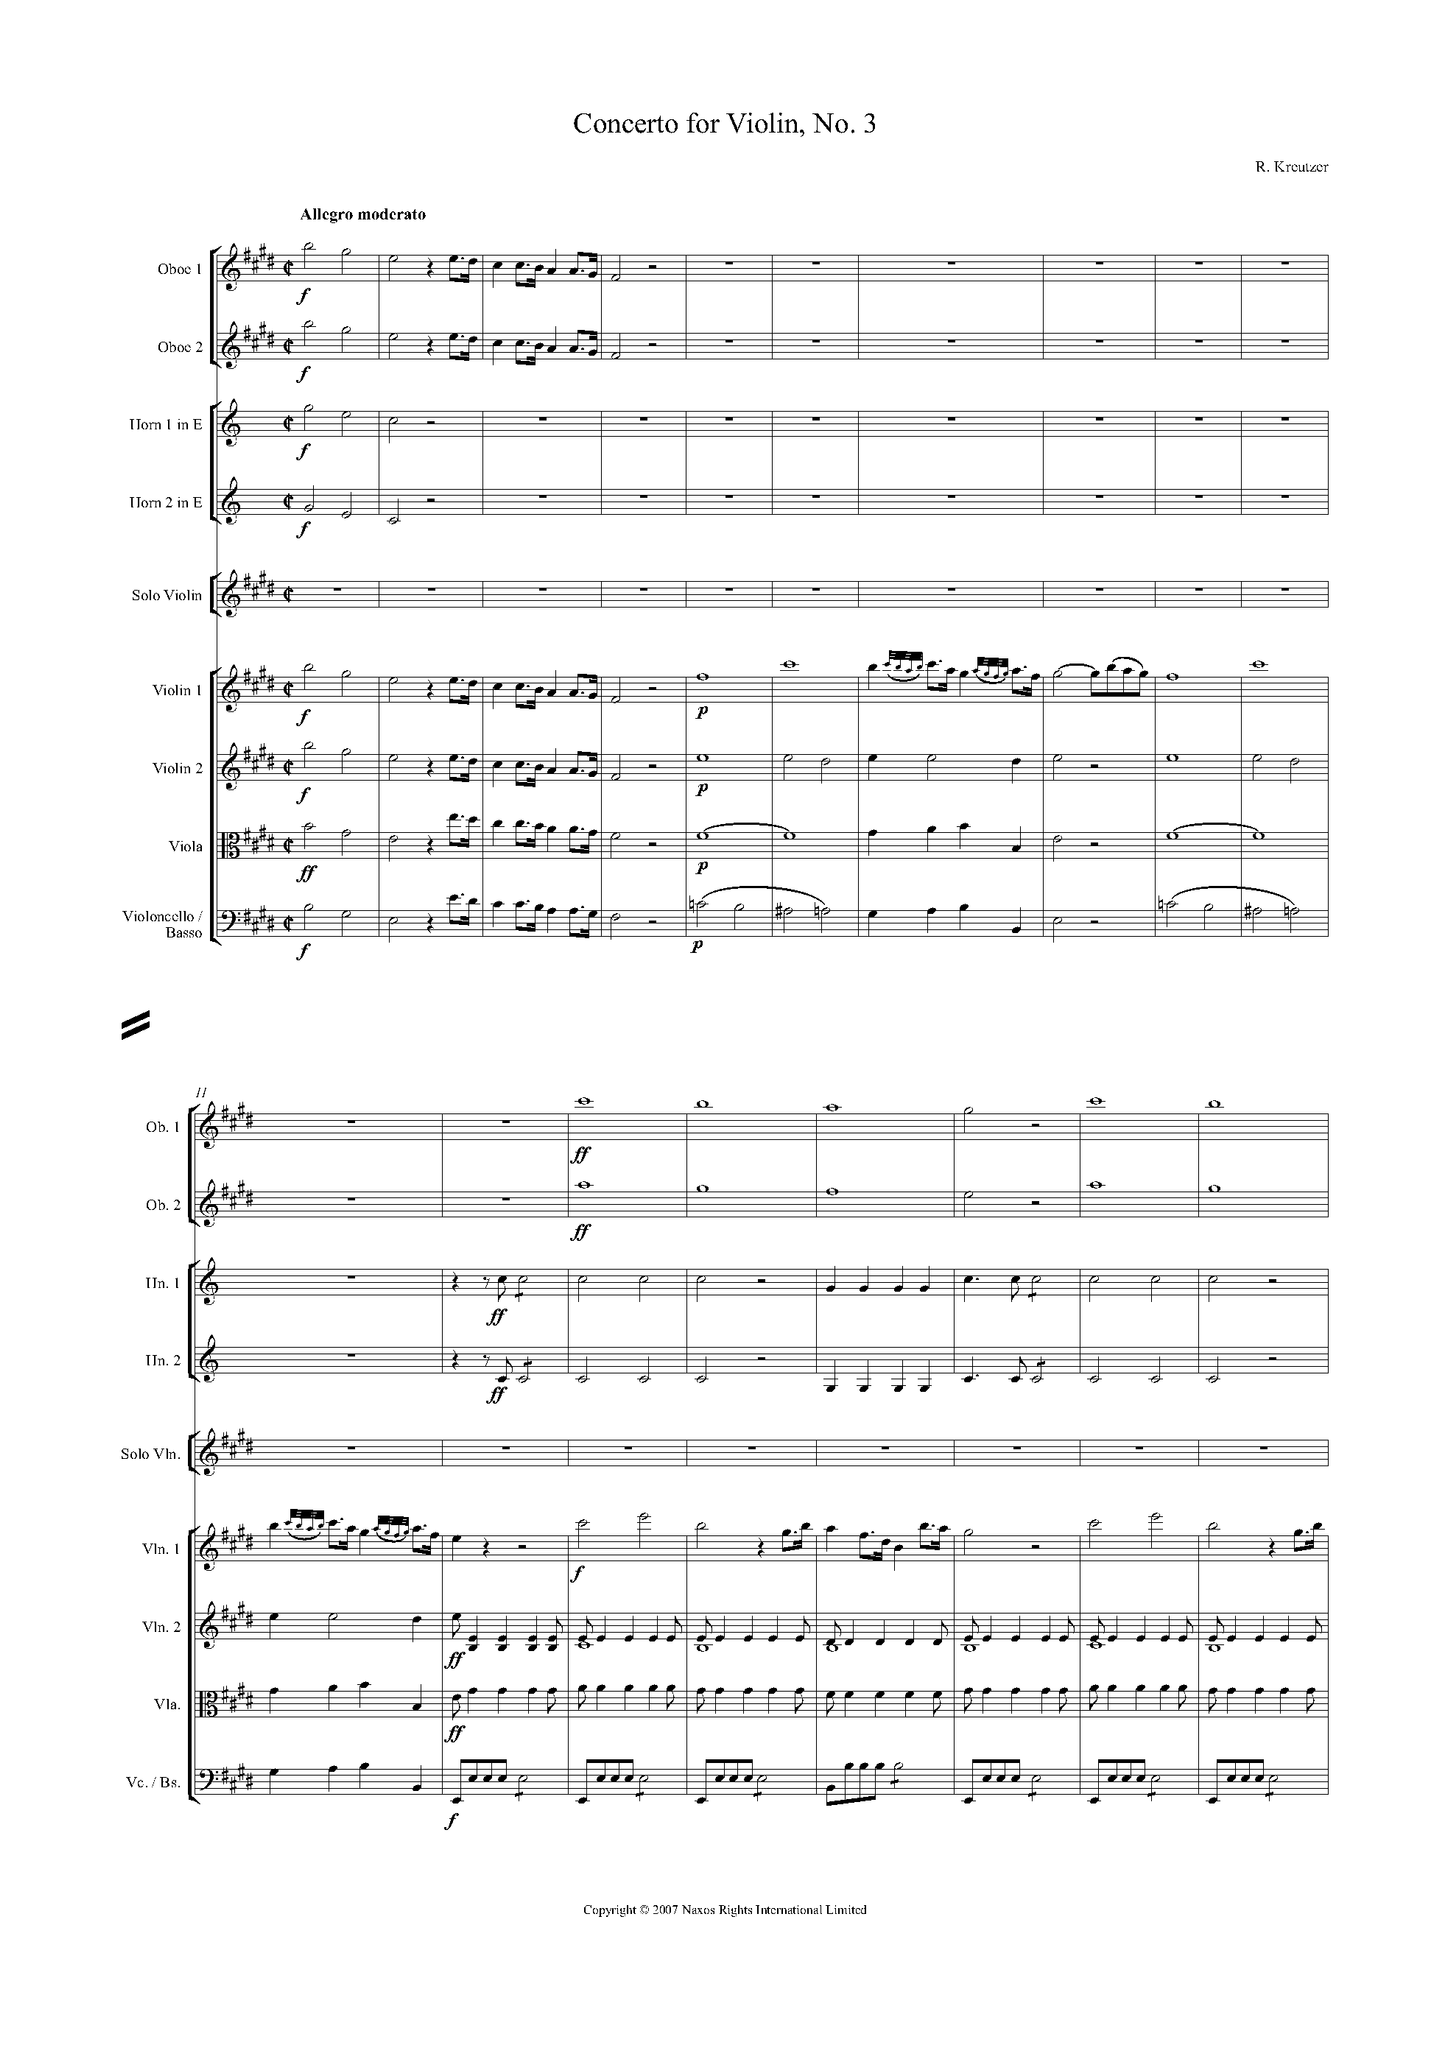 Rodolphe Kreutzer: Violin Concerto No. 3 in E major – full score (NXP020)